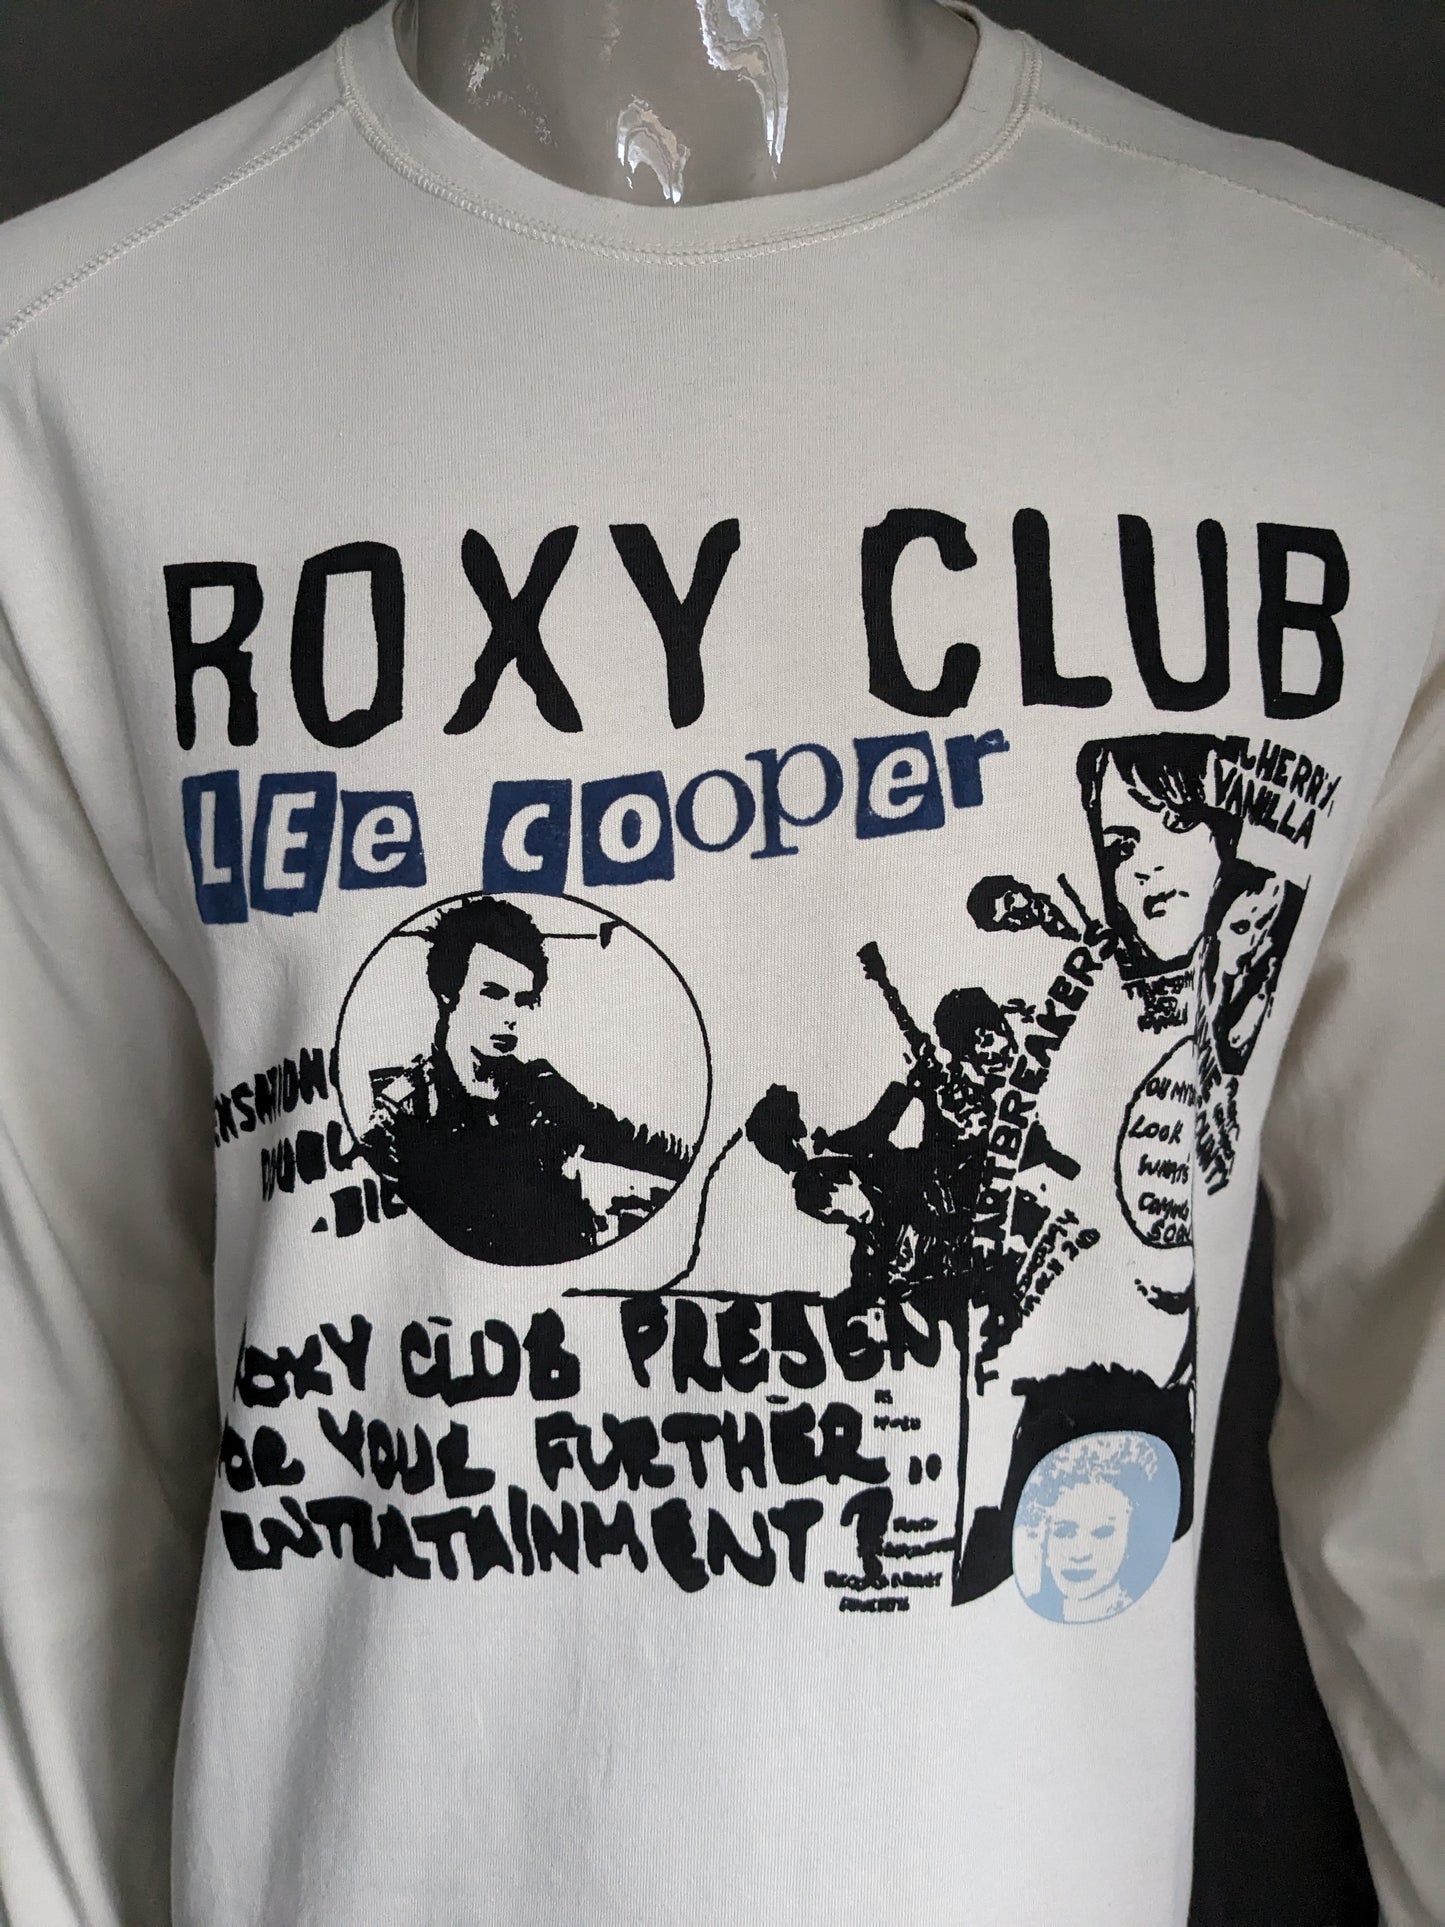 Lee Cooper "Roxy Club" Longsleeve. Beige with print. Size XL.